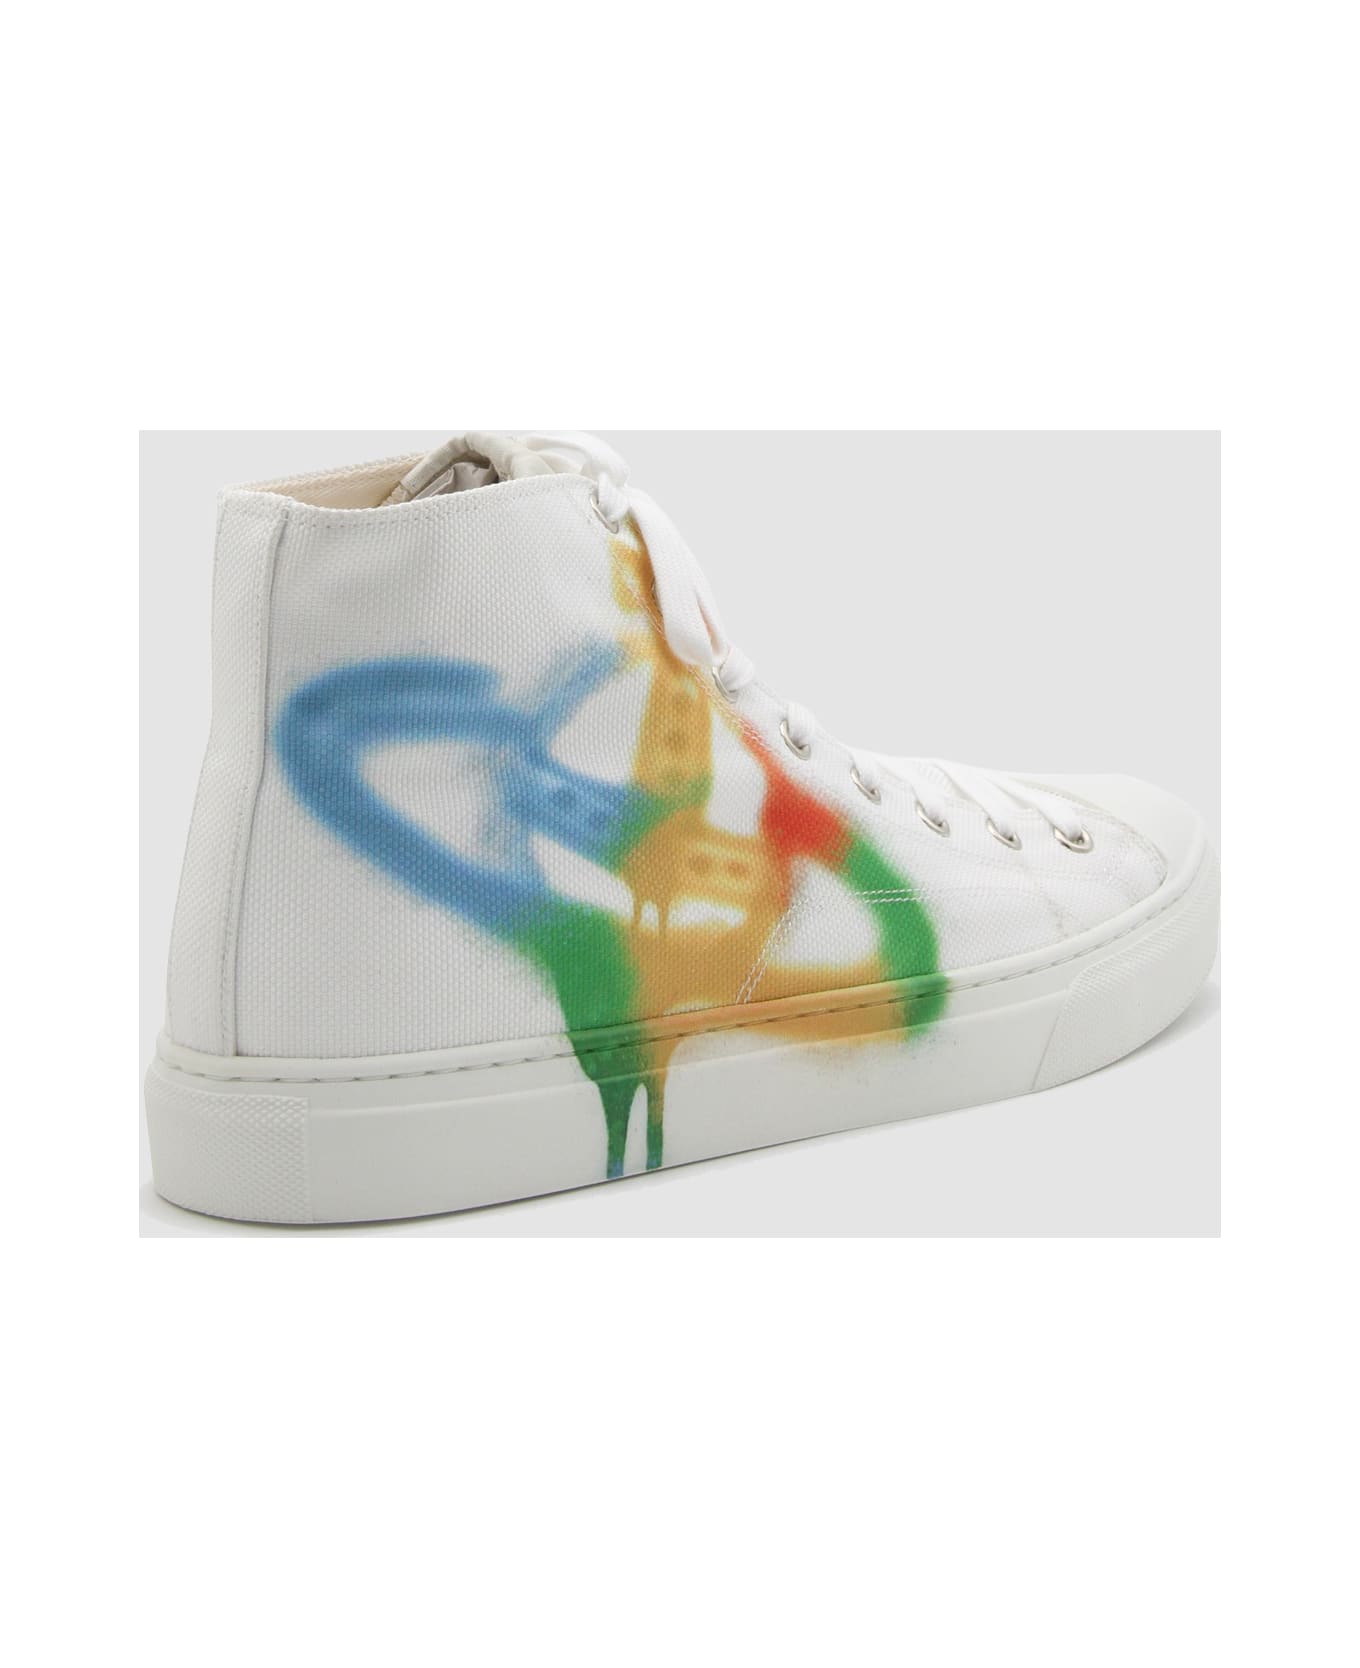 Vivienne Westwood White Plimsolls High Top Sneakers - White